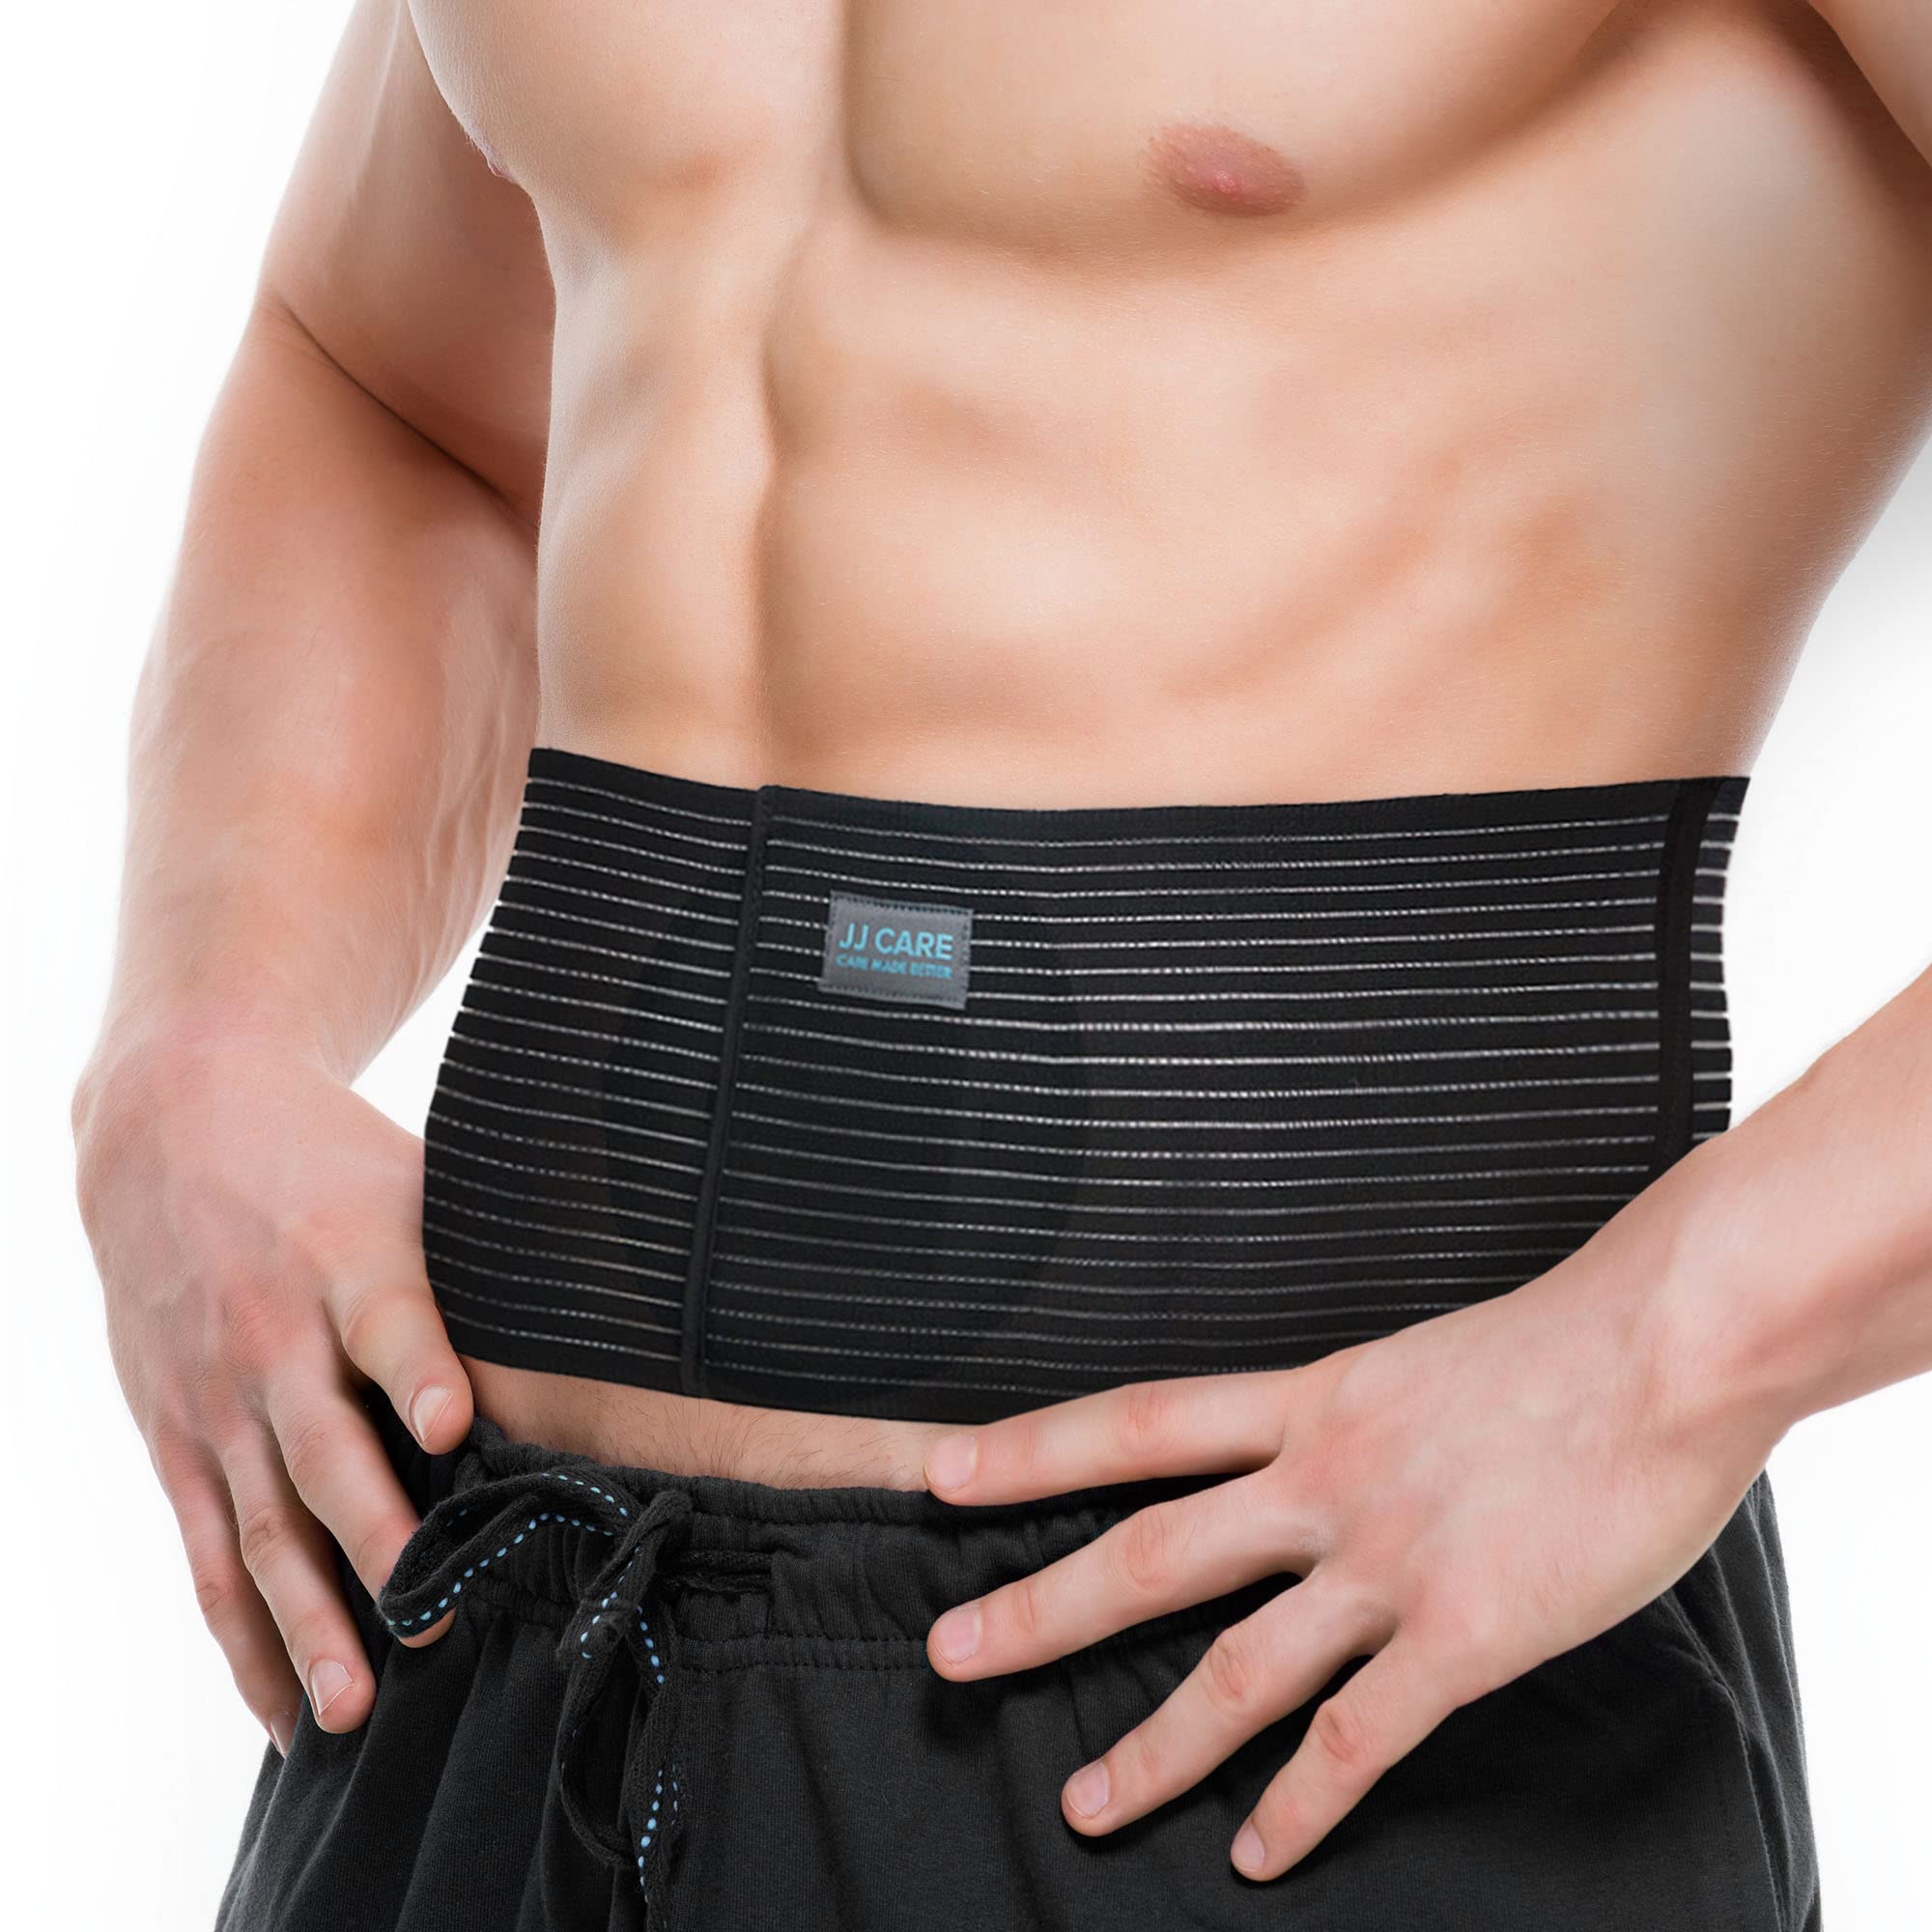 Hernia belt abdominal binder hernia belt for women umbilical hernia belt  for women abdominal binder post surgery belly binder abdominal hernia  support